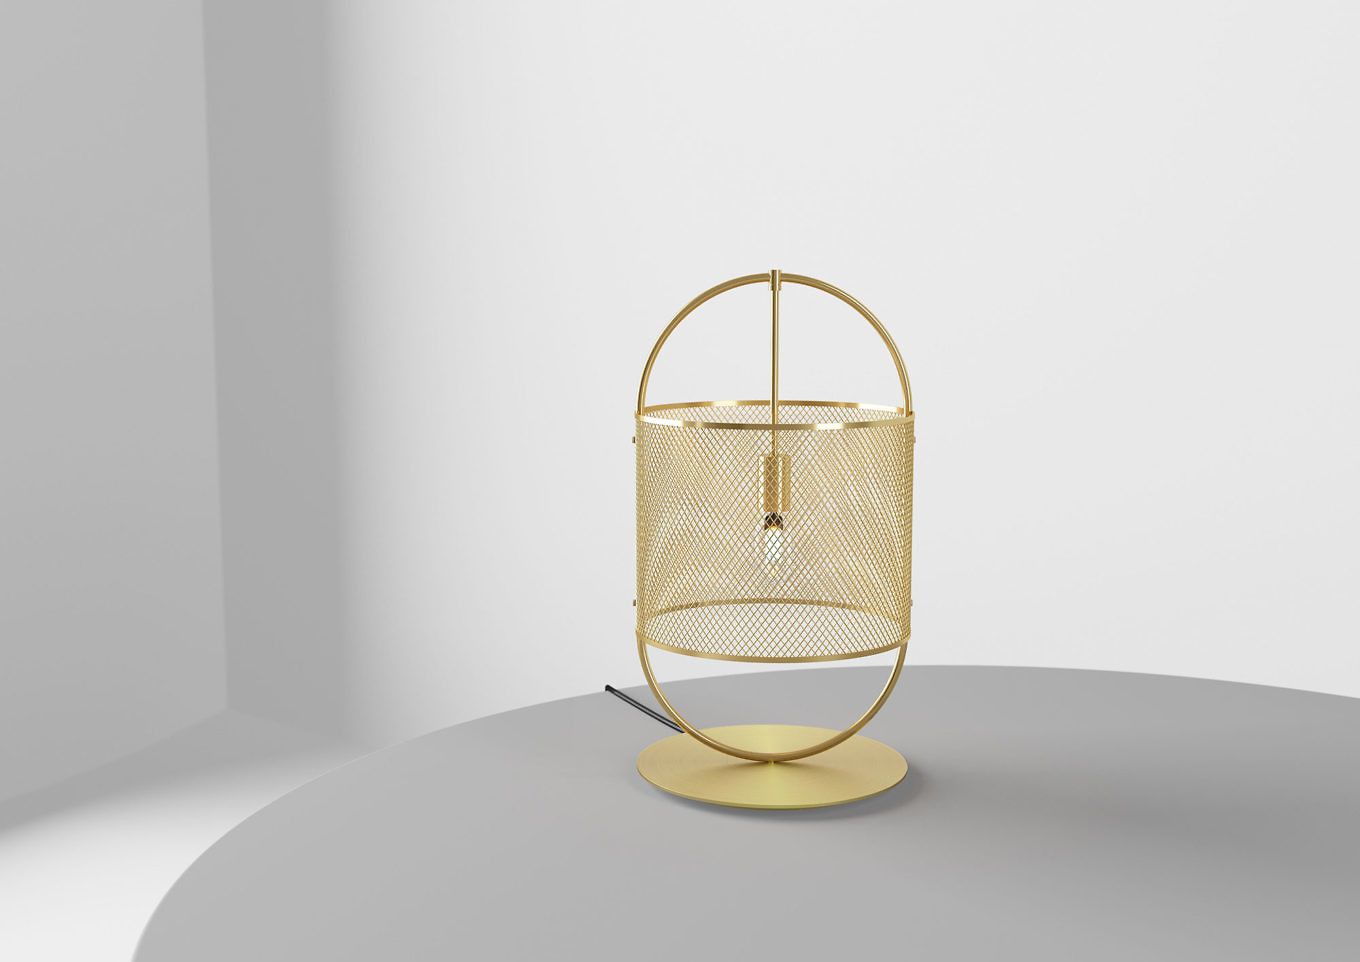 Lantern Lighting Series In the Contemporary Interior Design! 3